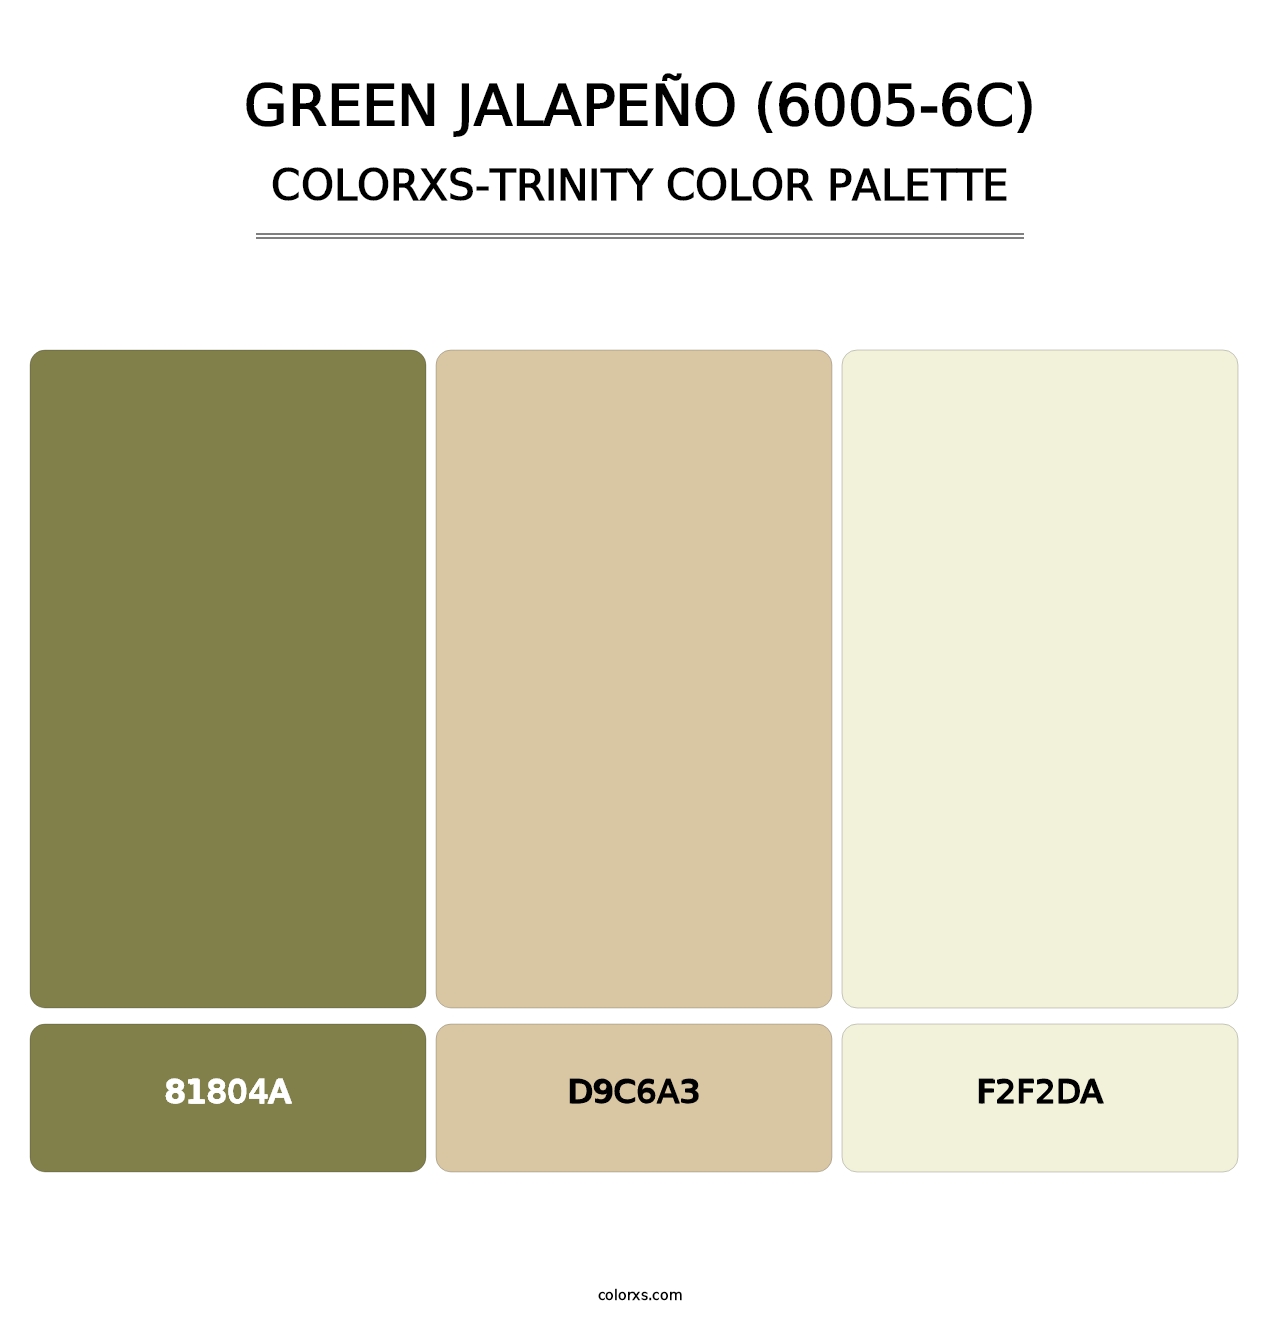 Green Jalapeño (6005-6C) - Colorxs Trinity Palette